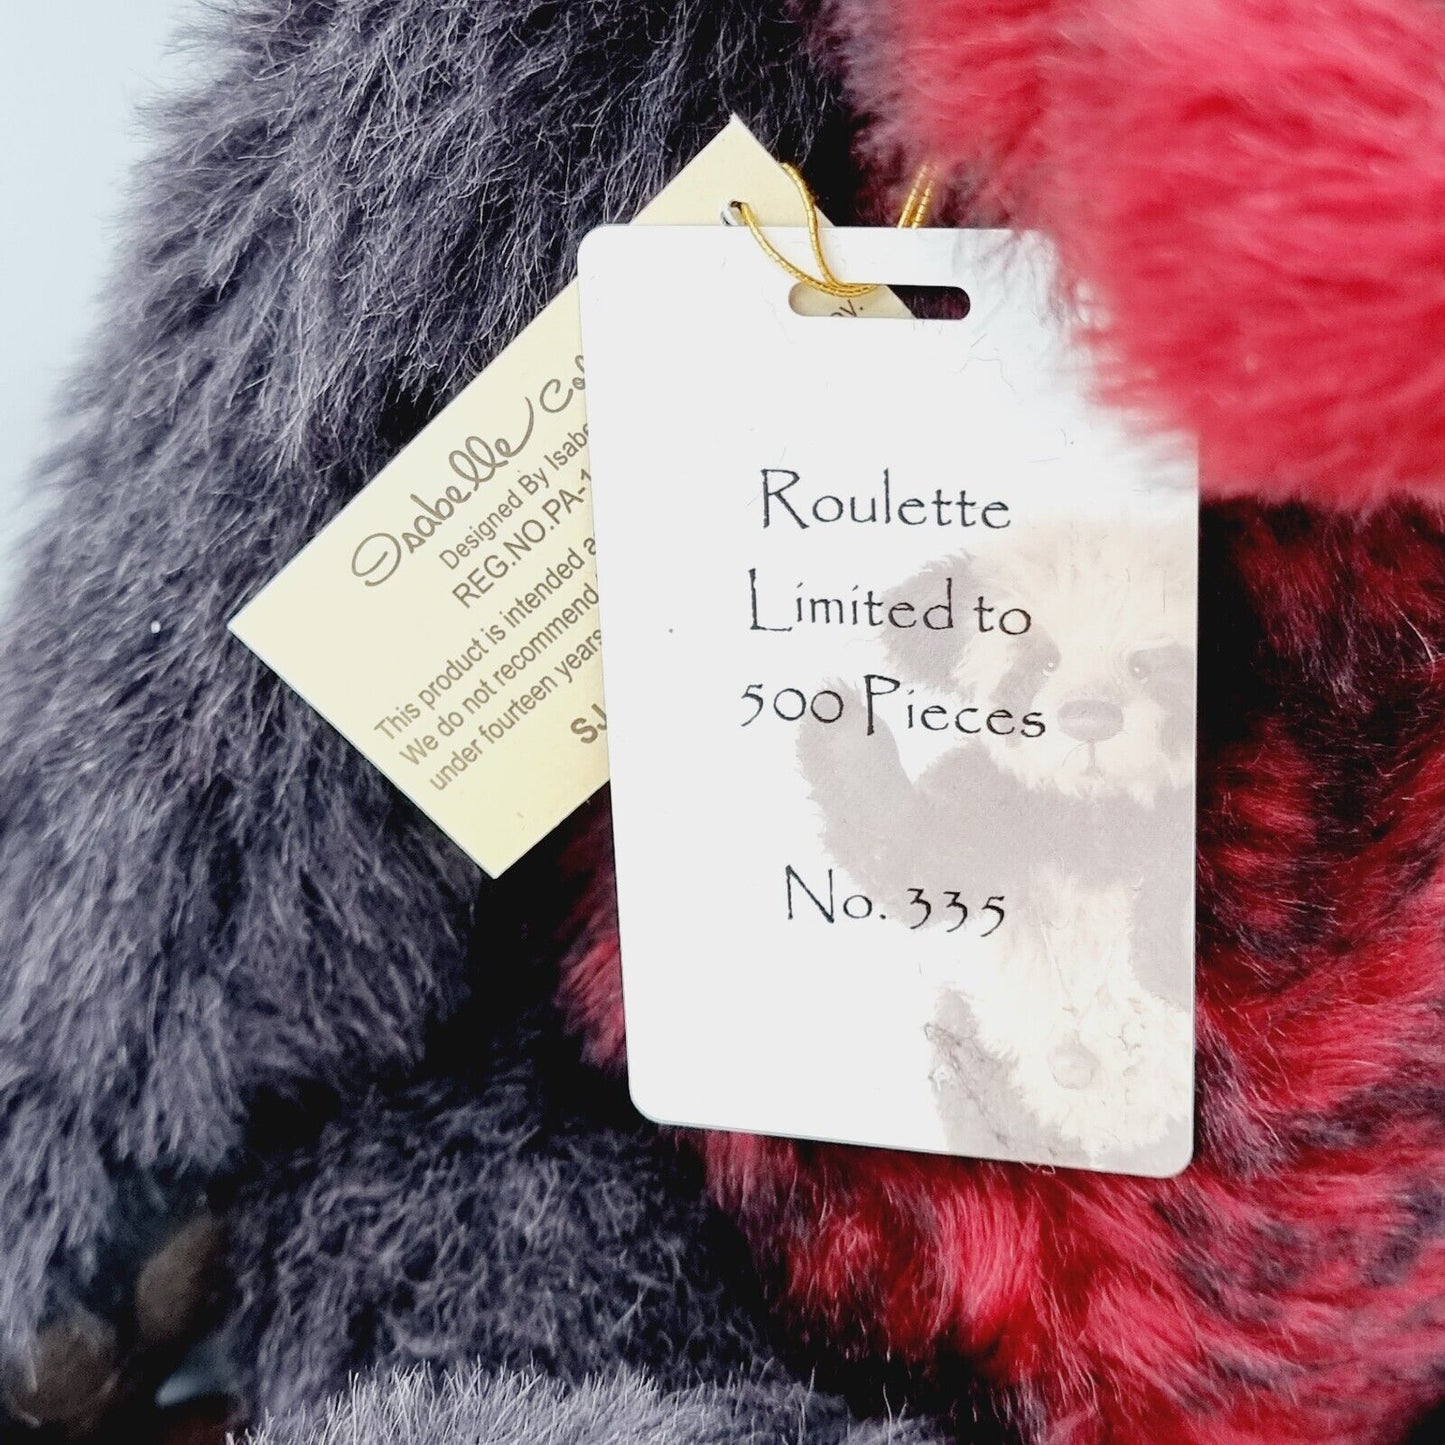 Charlie Bears SJ5037 Teddybär Roulette Isabelle Lee Collection limitiert 500